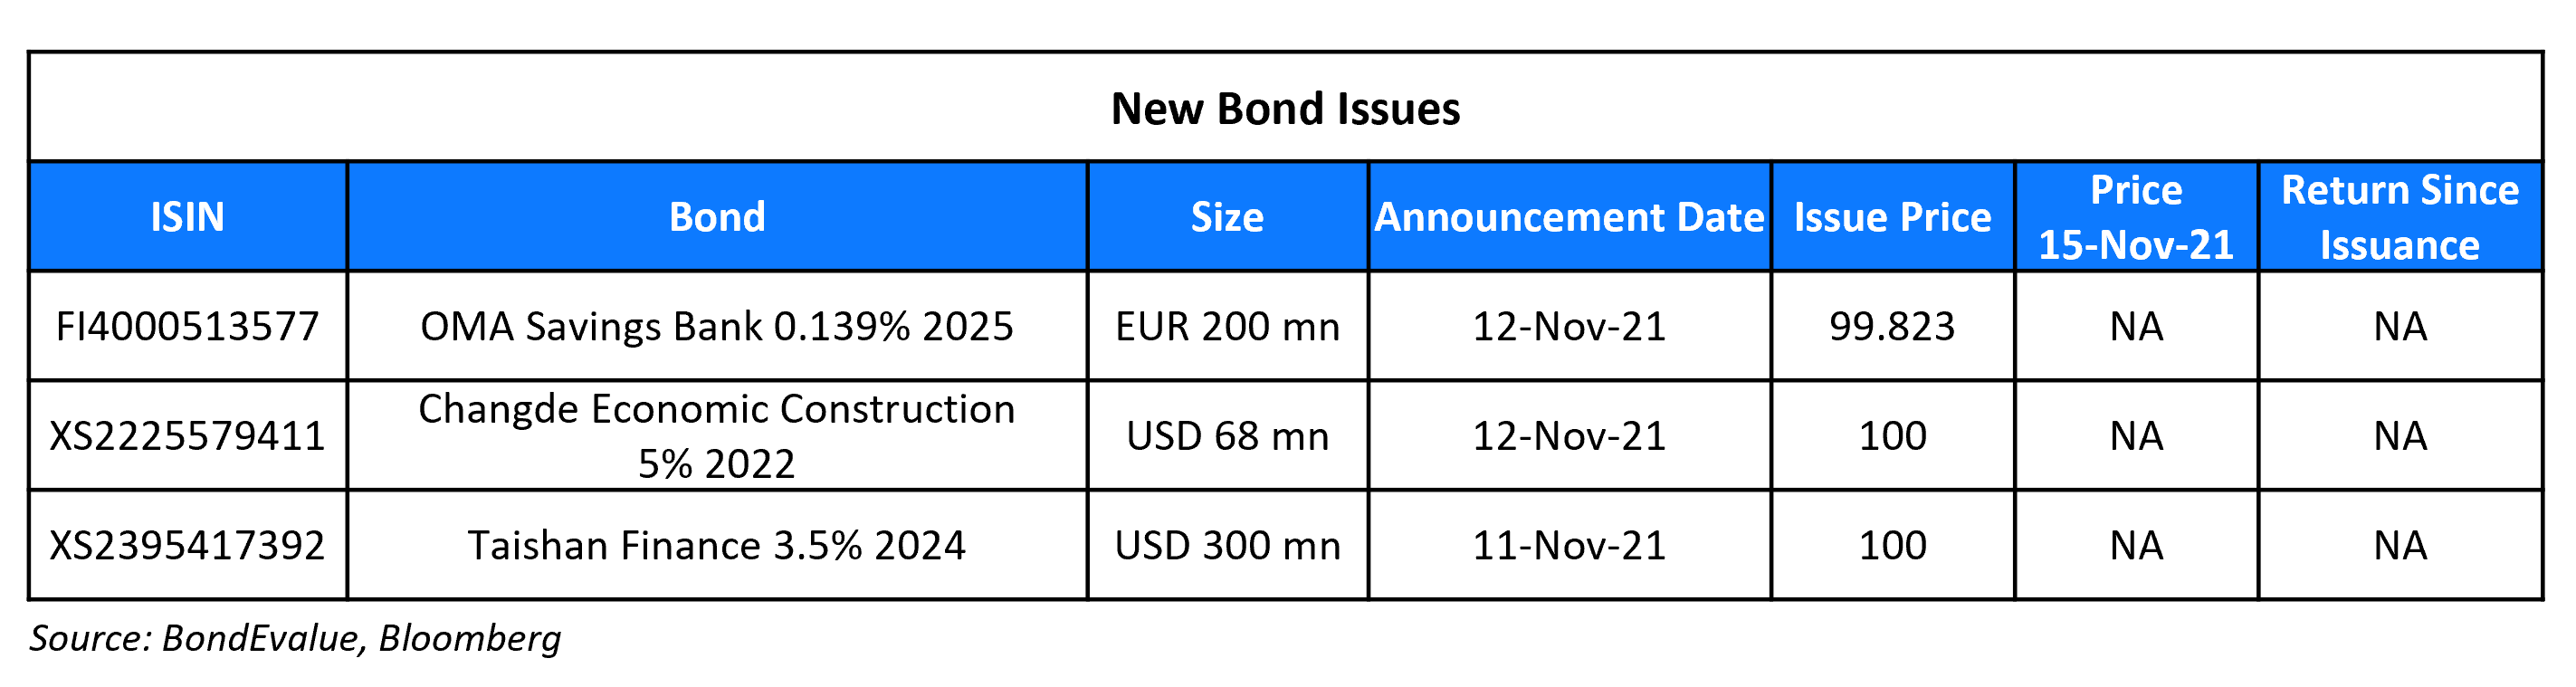 New Bond Issues 15 Nov